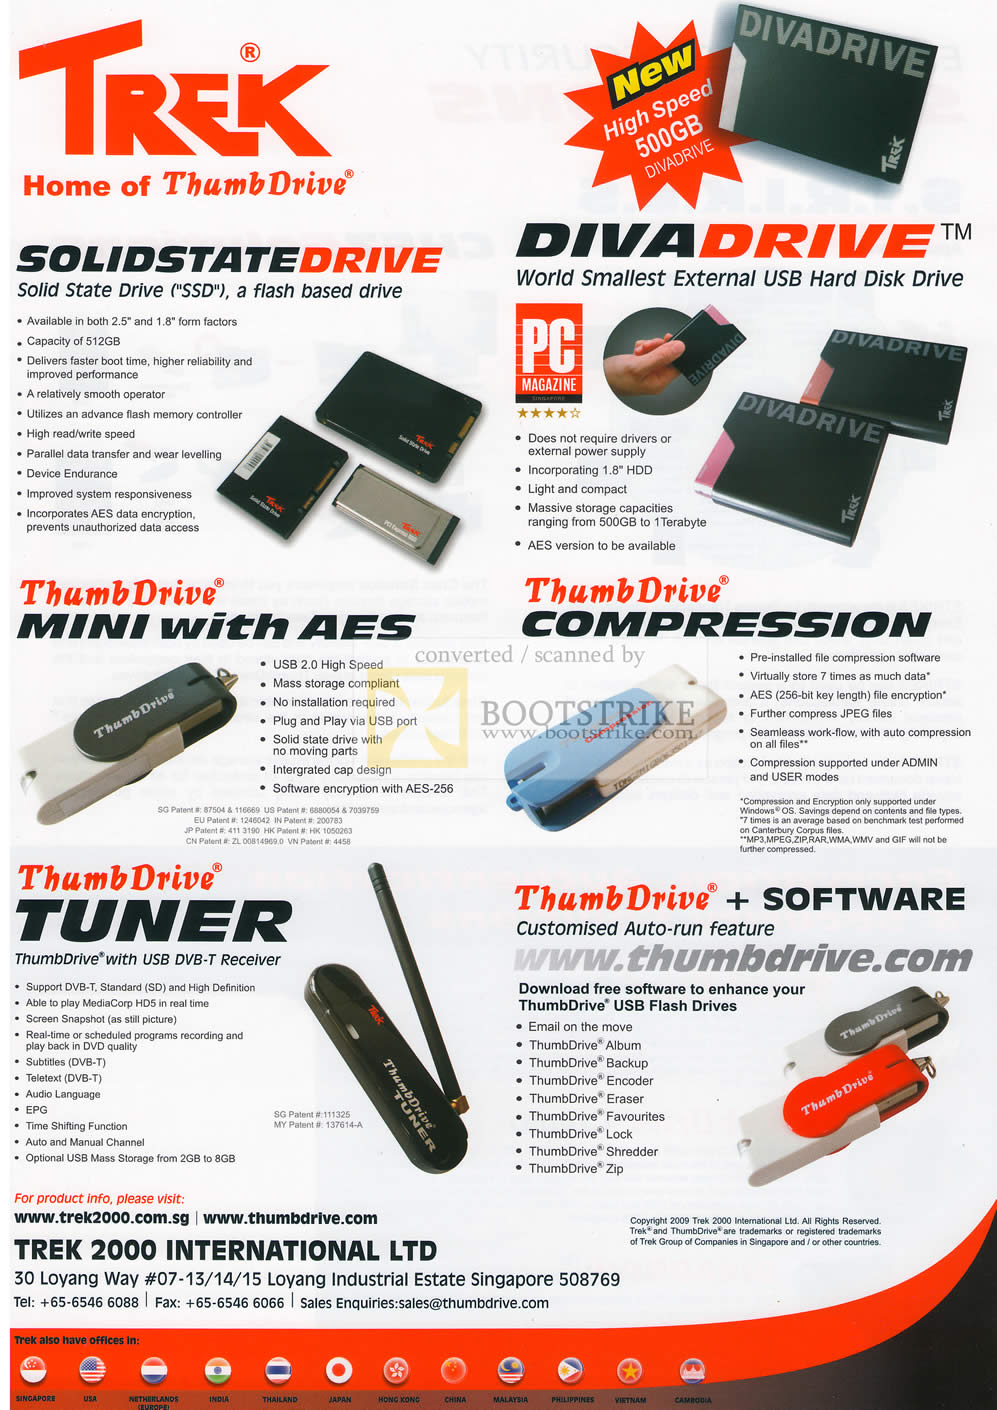 Sitex 2009 price list image brochure of Trek Thumbdrive SSD DivaDrive Mini AES Tuner Compression